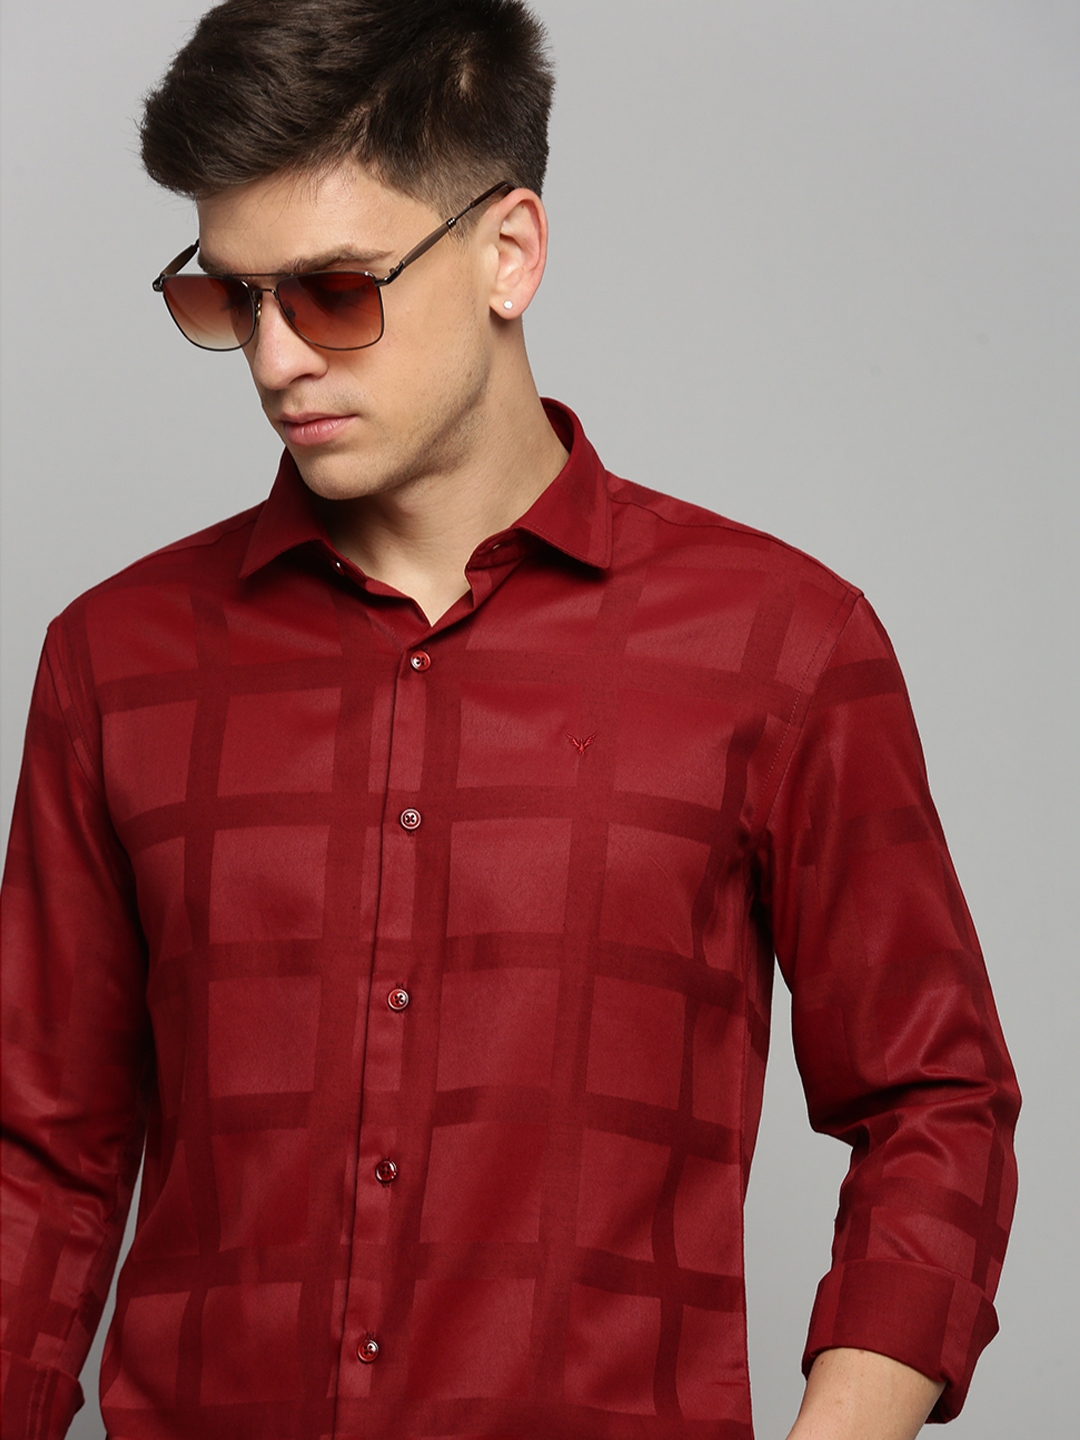 Showoff | SHOWOFF Men's Spread Collar Solid Maroon Classic Shirt 0